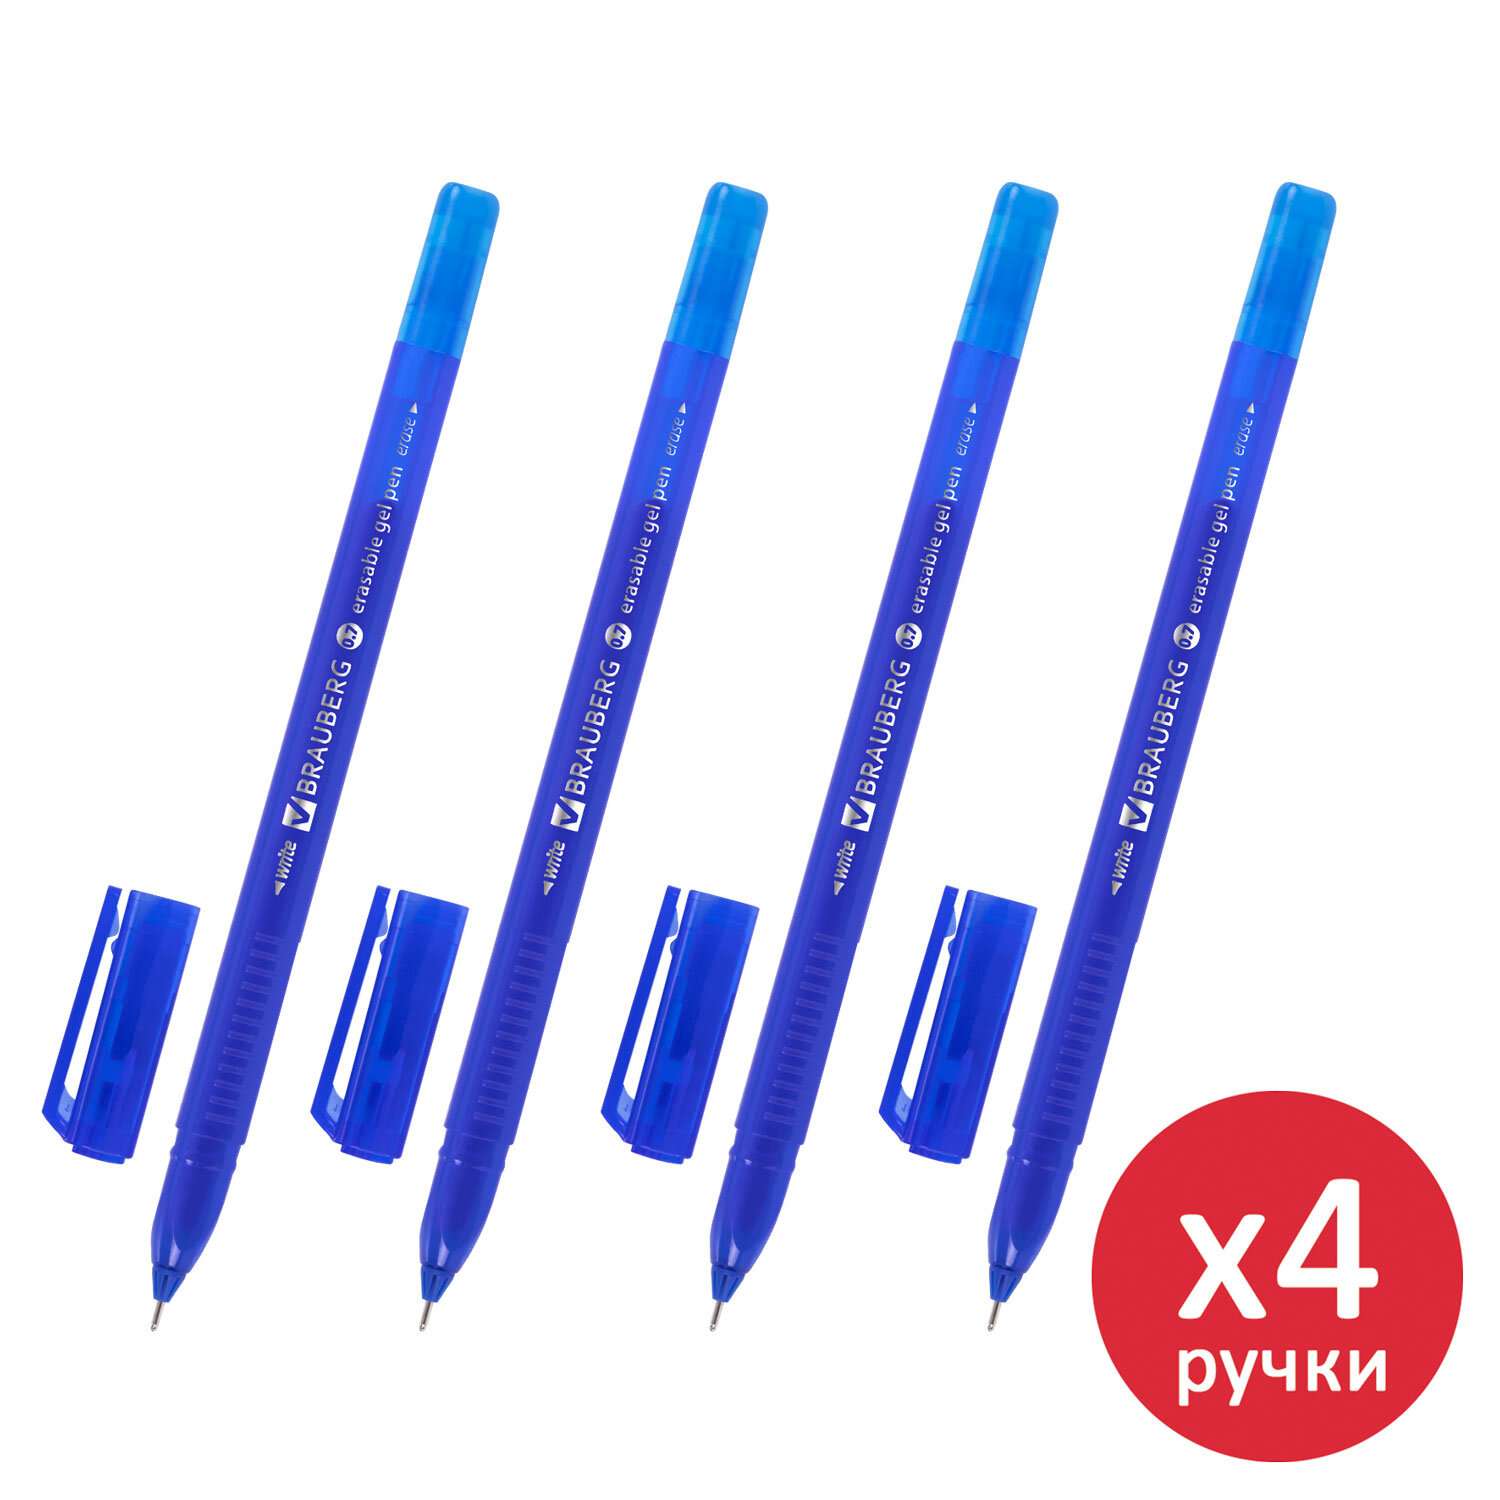 Ручки гелевые Brauberg пиши стирай набор 4 штуки синие - фото 1